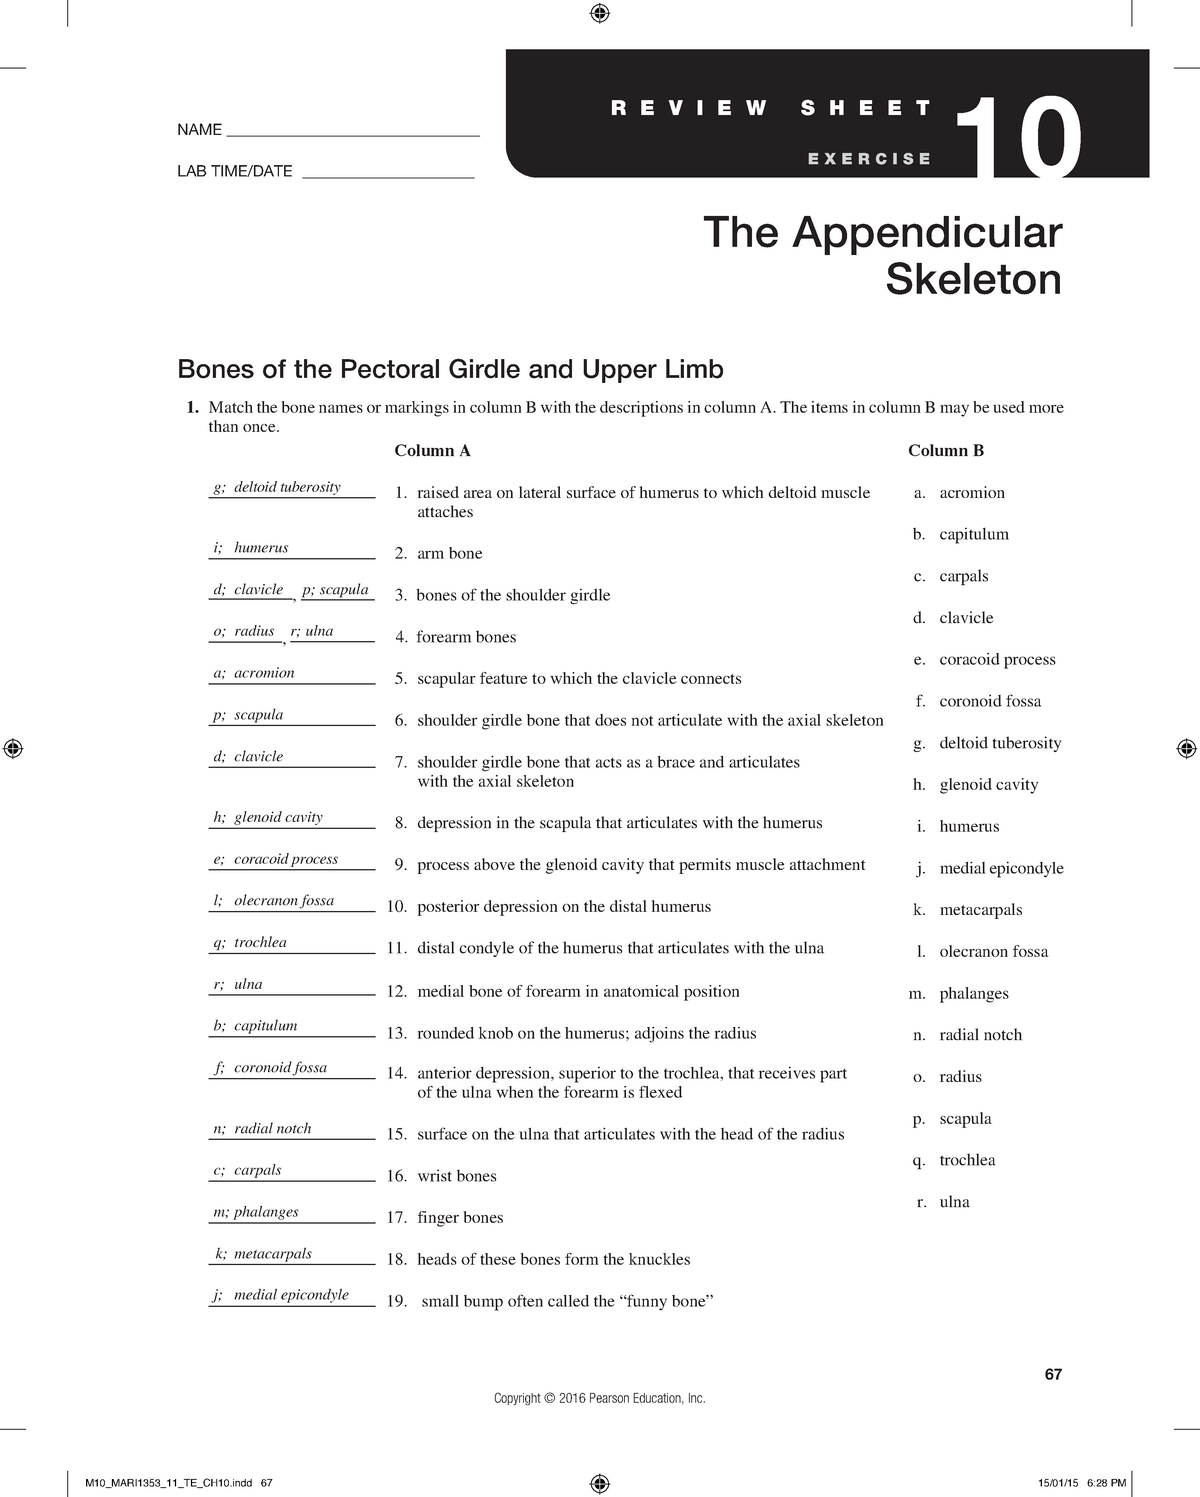 Exercise 11 - Appendicular Skeleton - BIOL 2011 - Human Anatomy Regarding Appendicular Skeleton Worksheet Answers